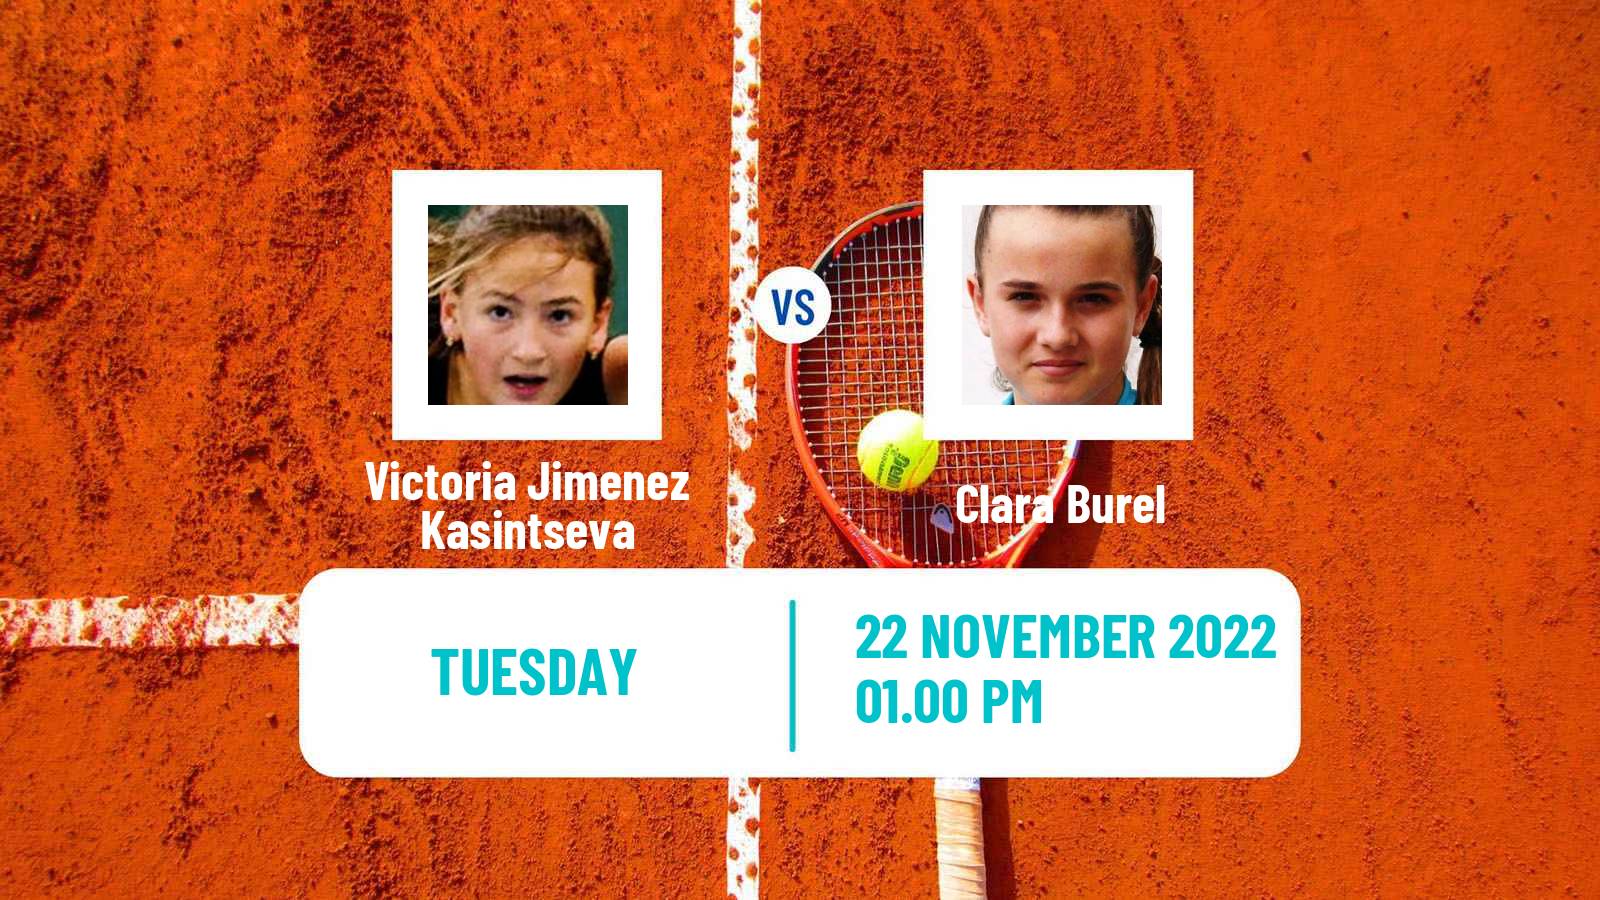 Tennis ATP Challenger Victoria Jimenez Kasintseva - Clara Burel